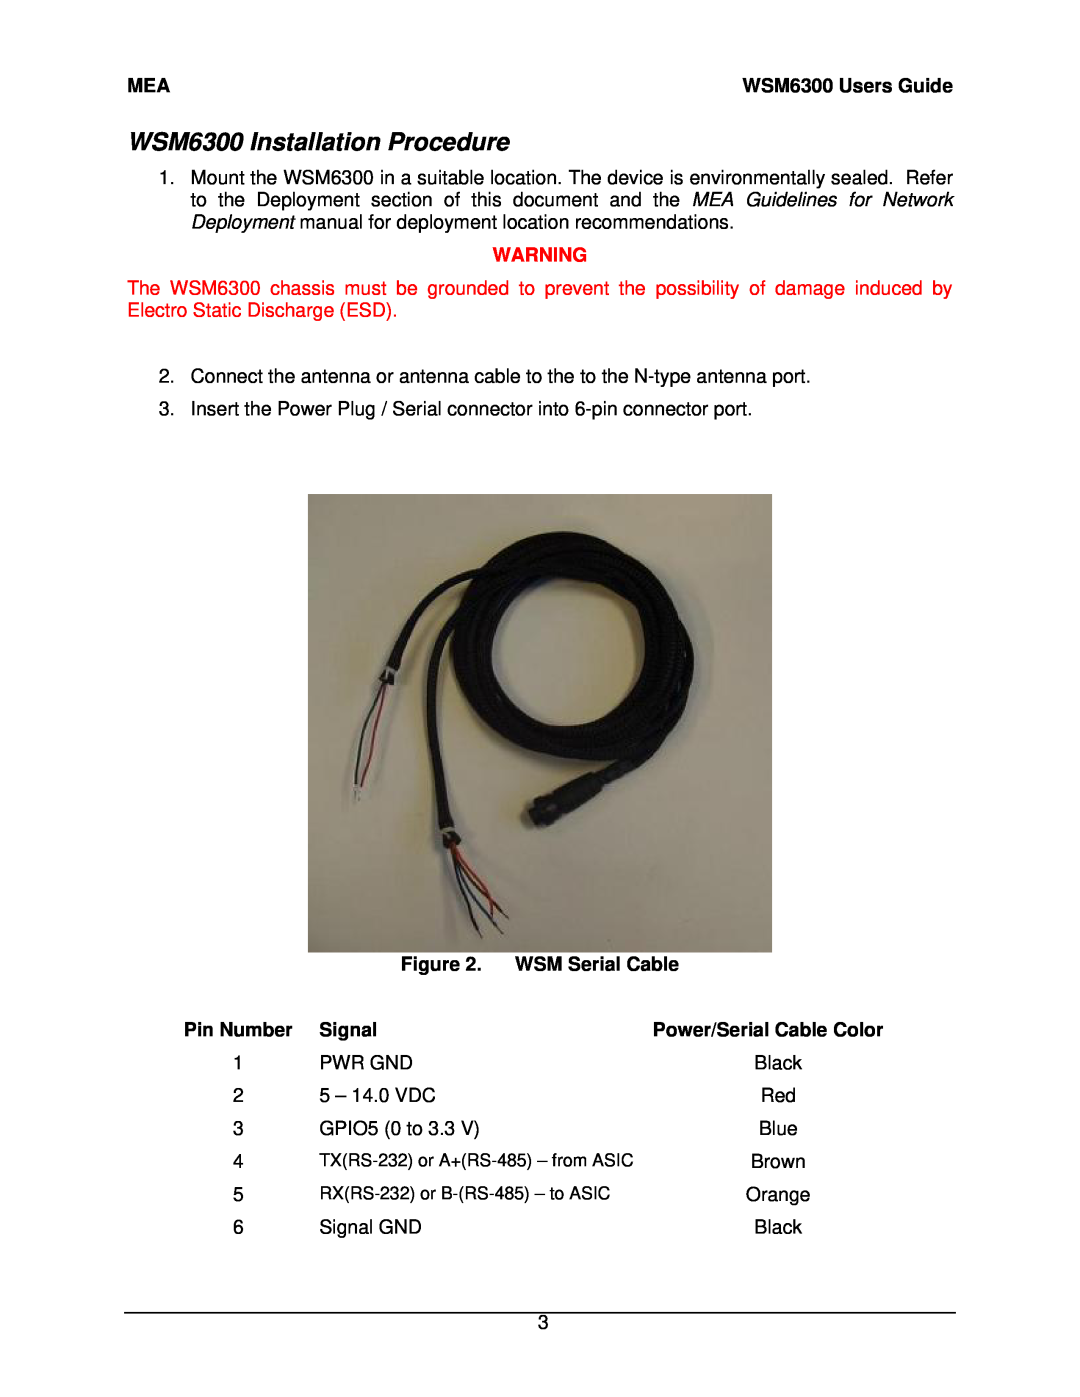 Motorola manual WSM6300 Installation Procedure, WSM Serial Cable, Signal, Orange 